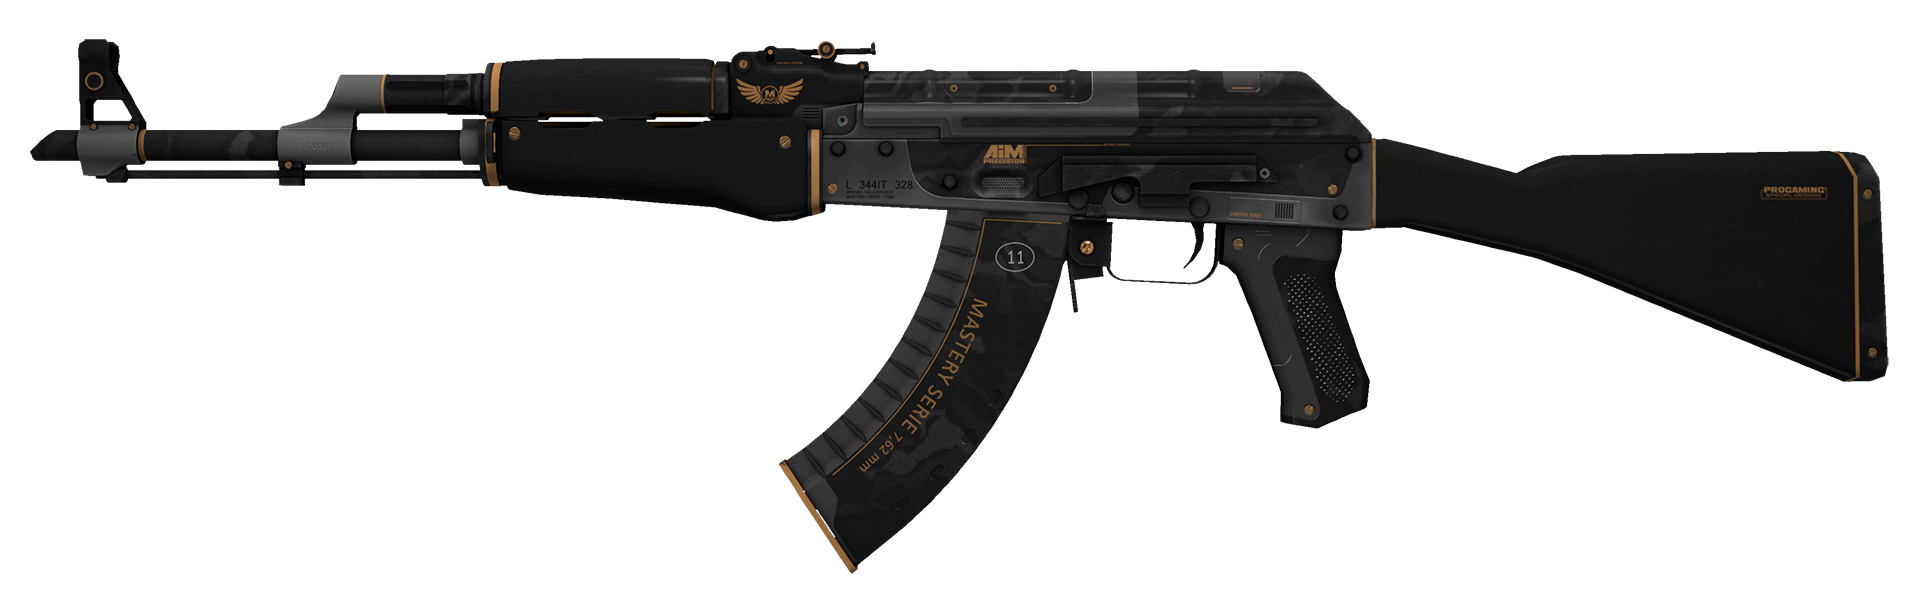 AK-47 Elite Build Large Rendering